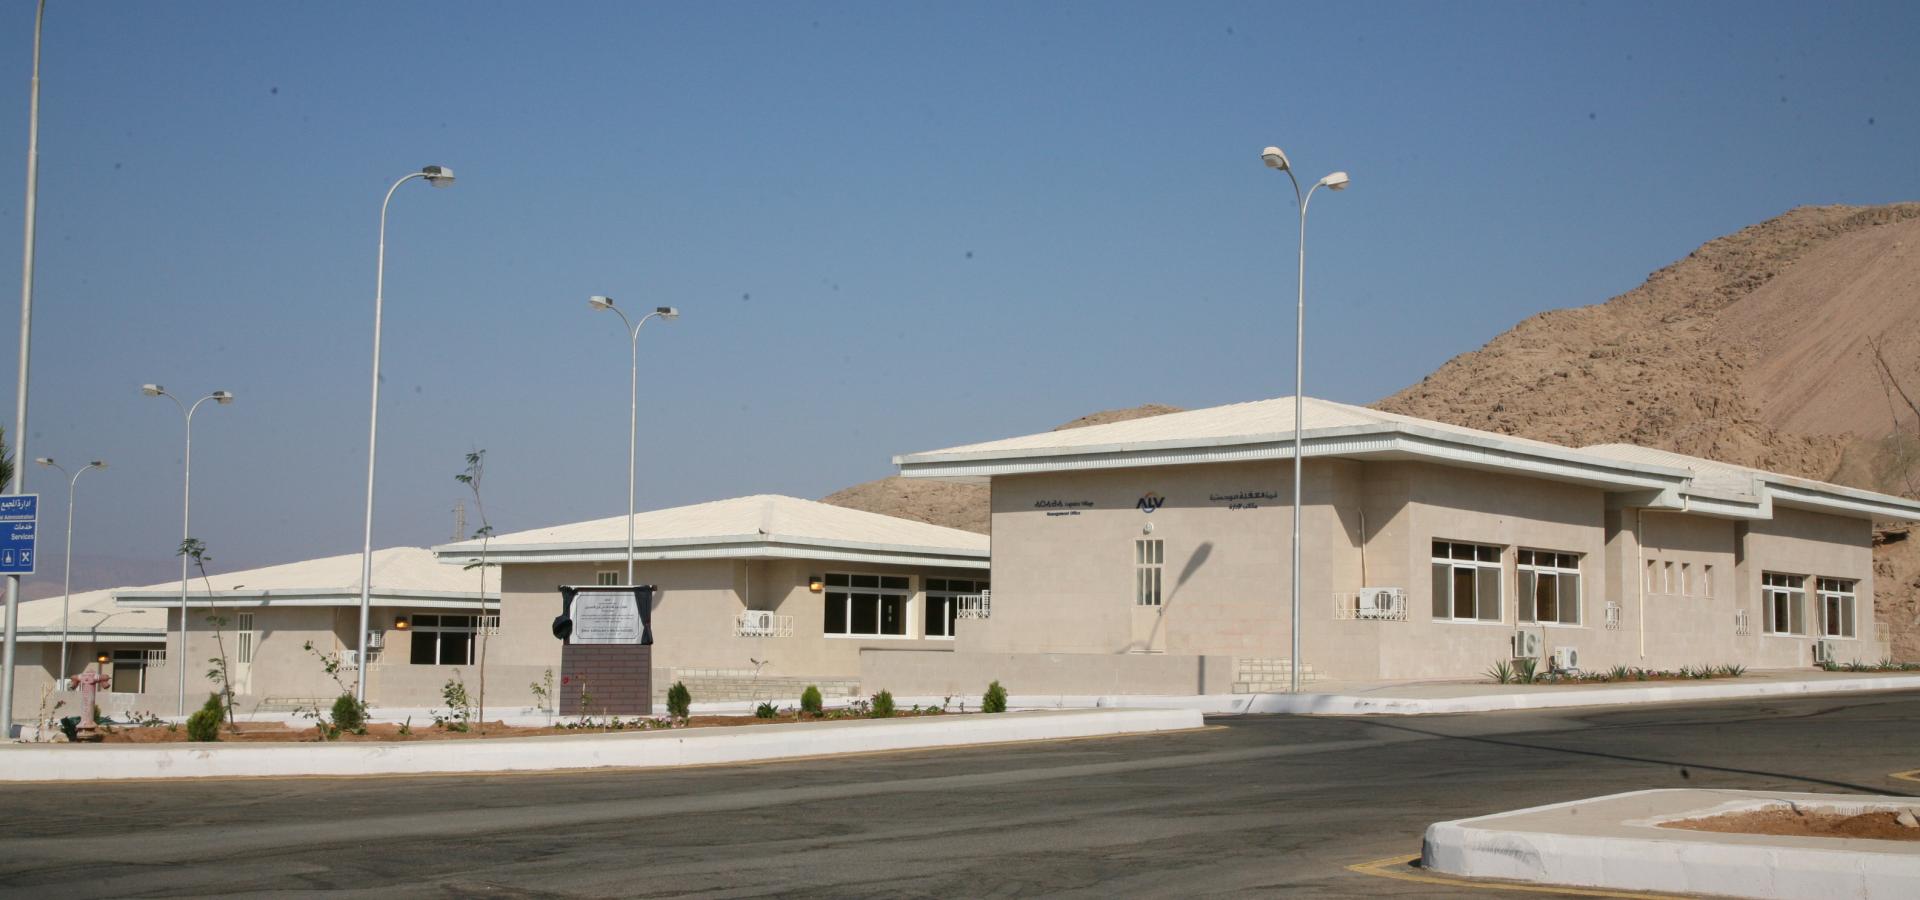 Service Center